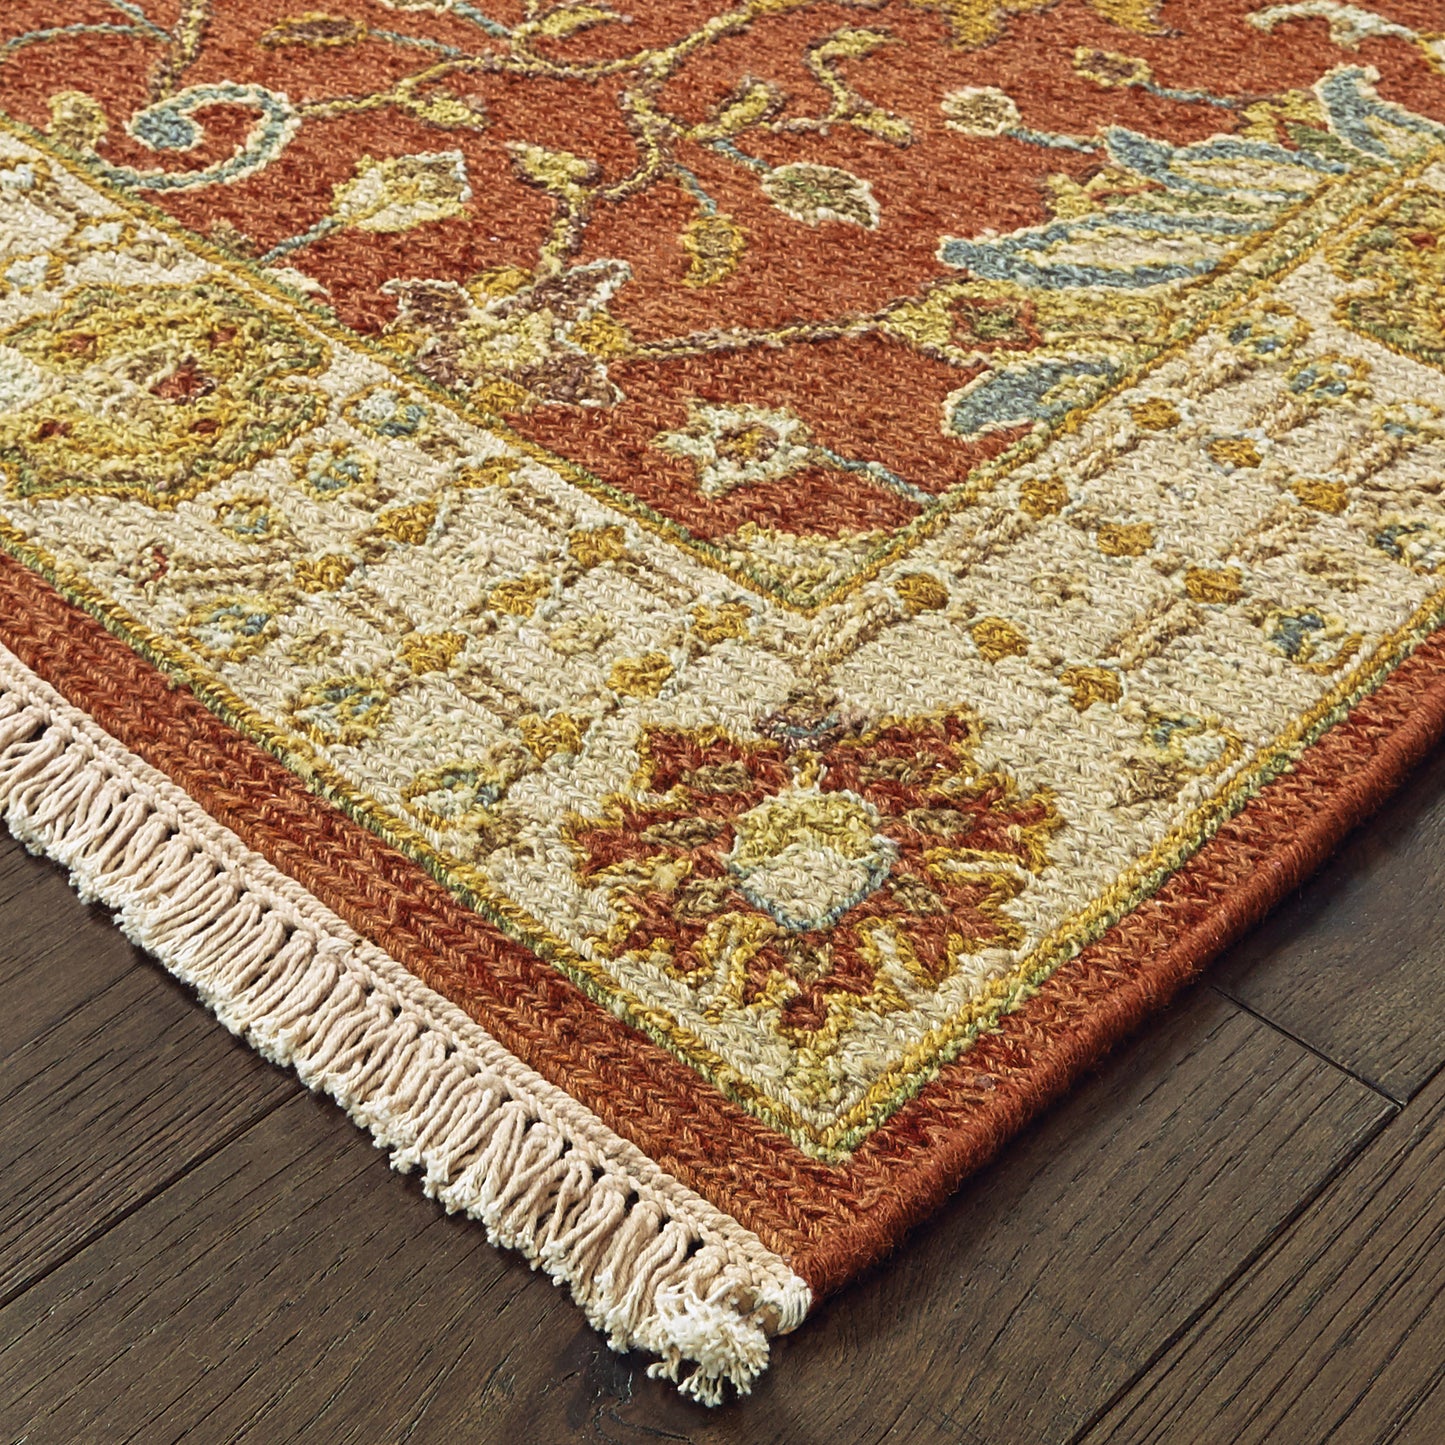 ANGORA Oriental Hand-Woven Wool Indoor Area Rug by Oriental Weavers